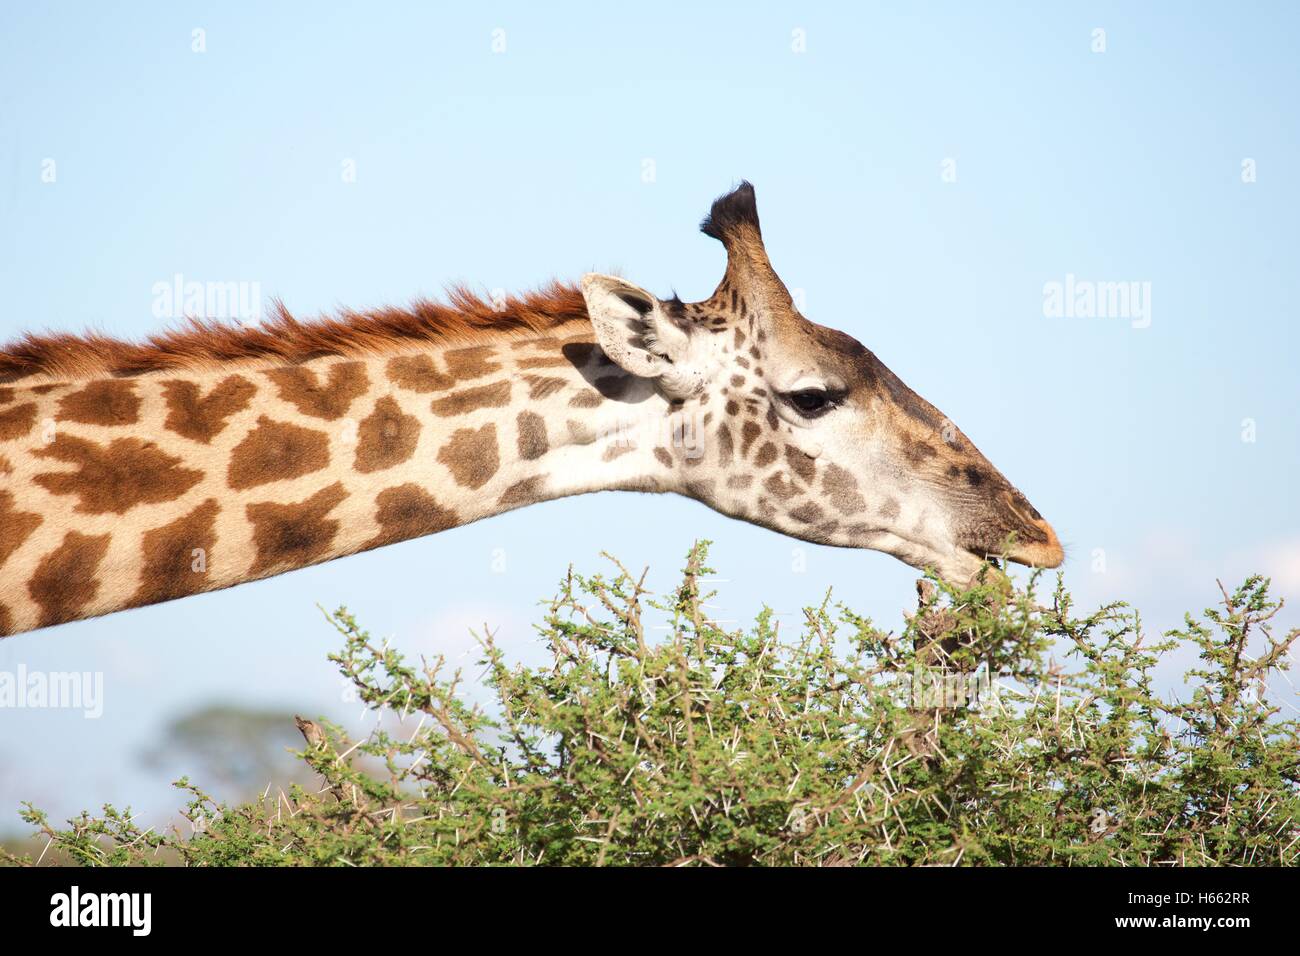 Viewing giraffes on safari in Serengeti National Park, Tanzania. Stock Photo